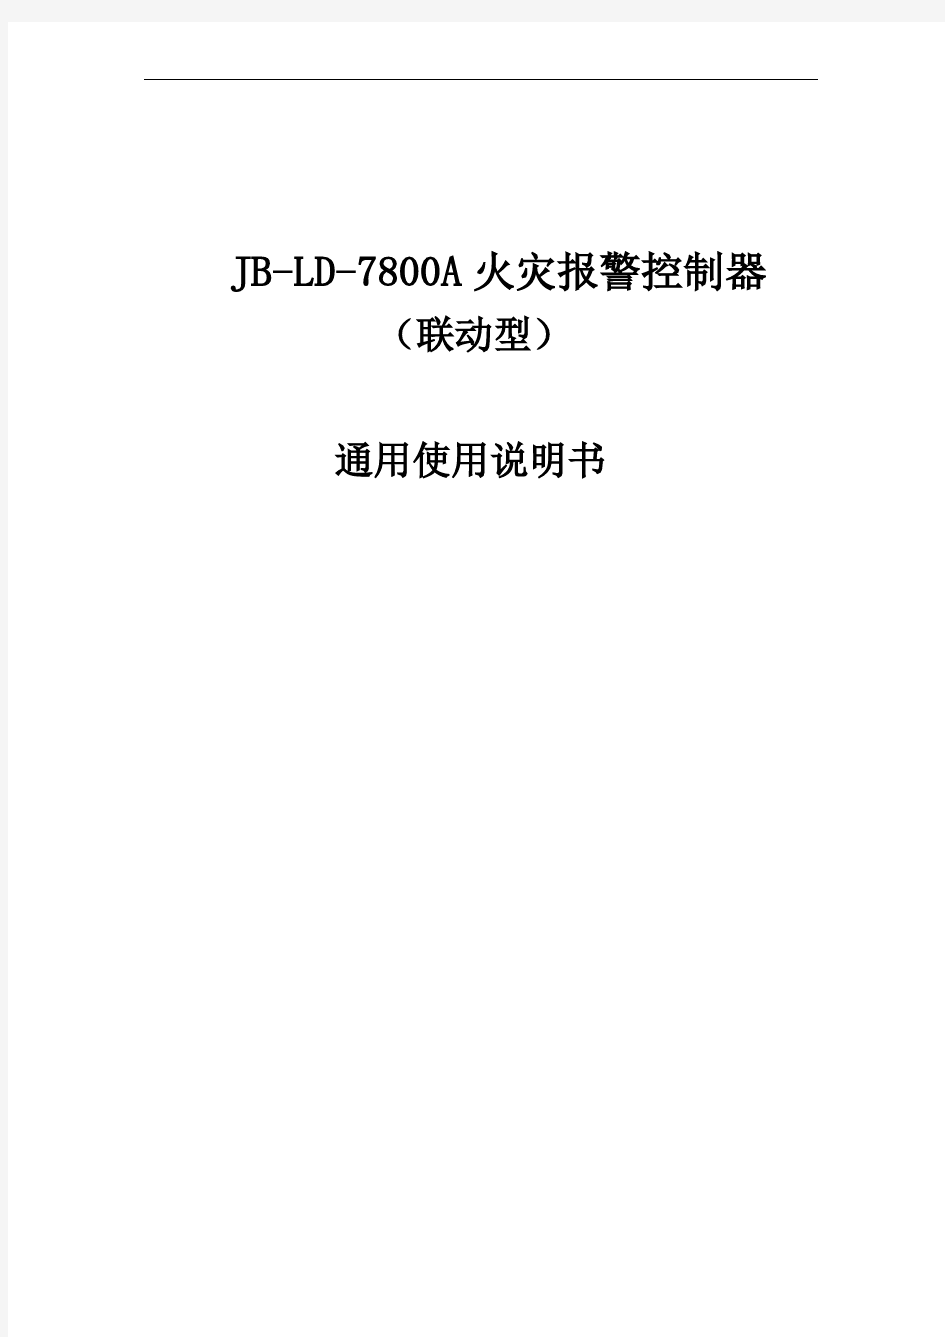 JB-LD-7800A火灾报警控制器说明书